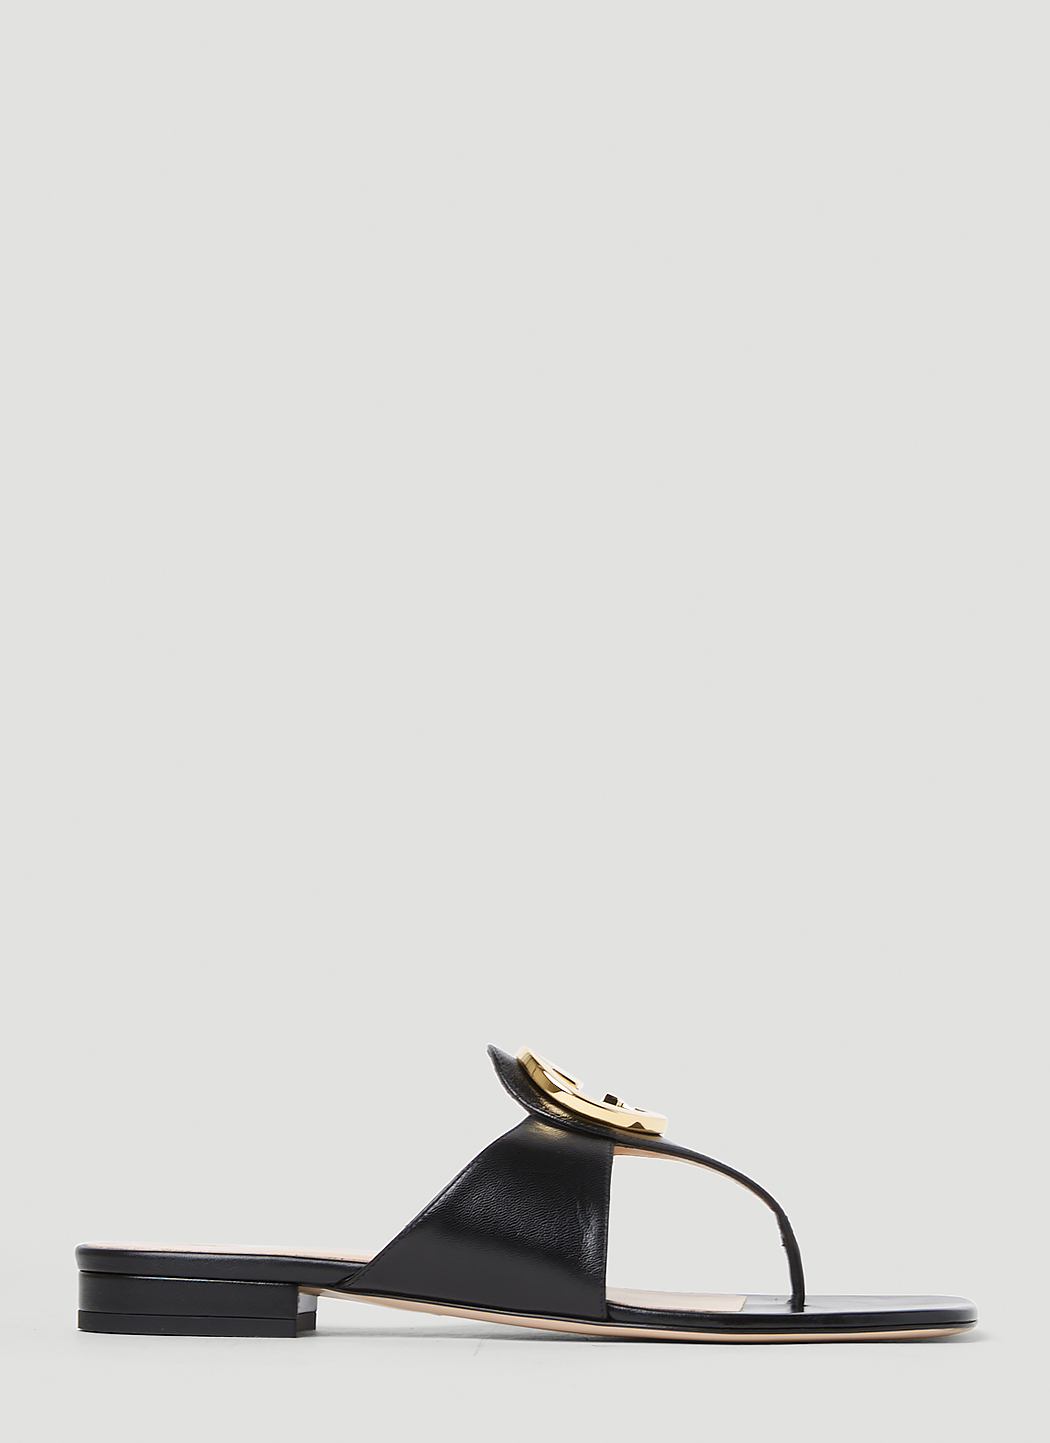 Interlocking G Thong Sandals in Black - Gucci